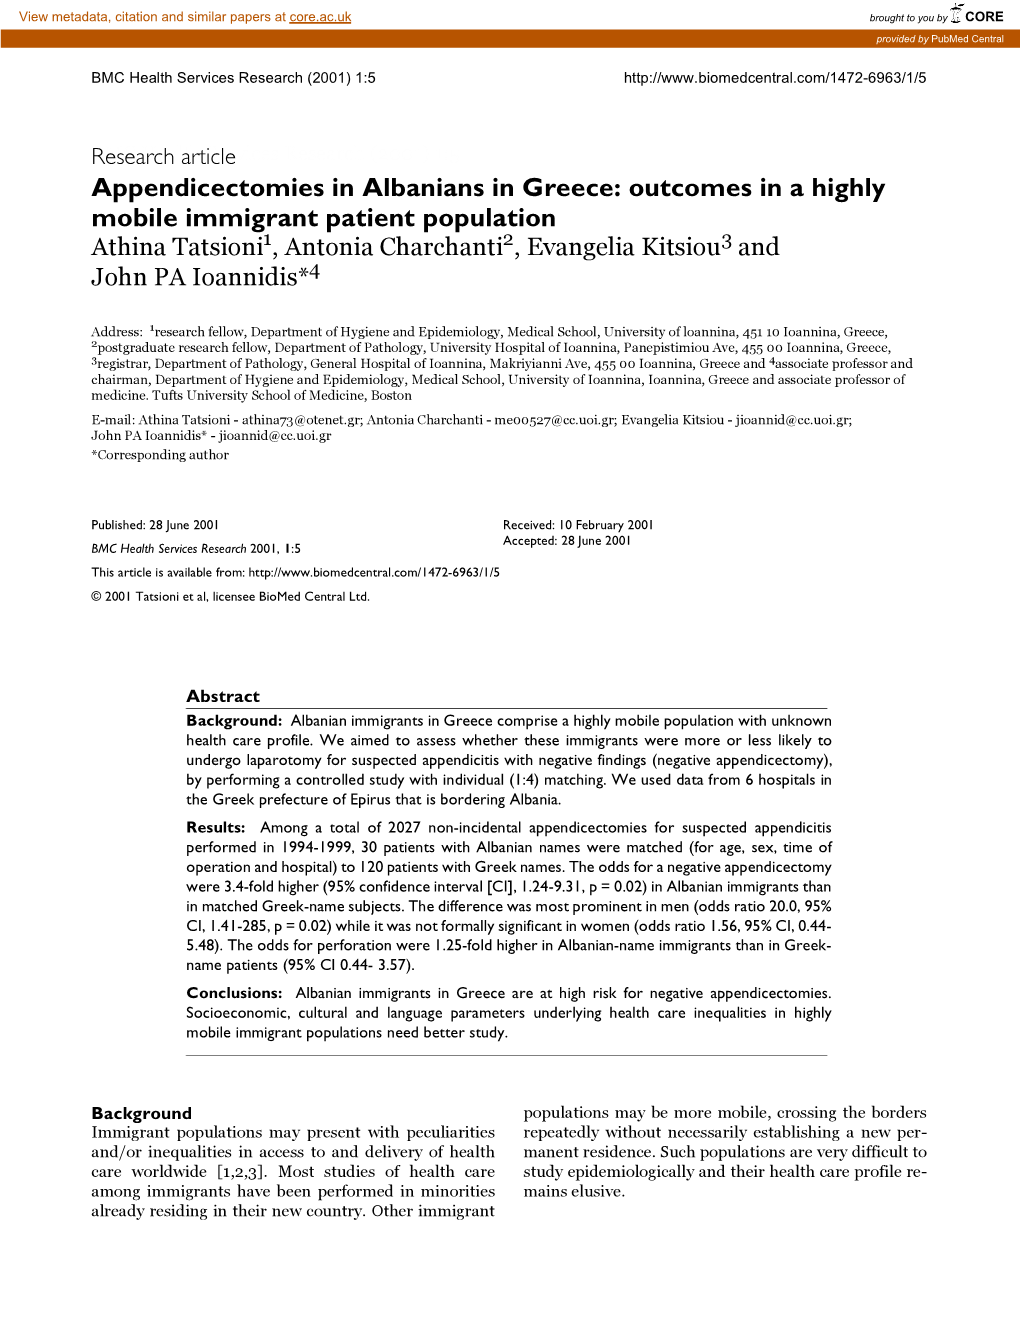 Appendicectomies in Albanians in Greece